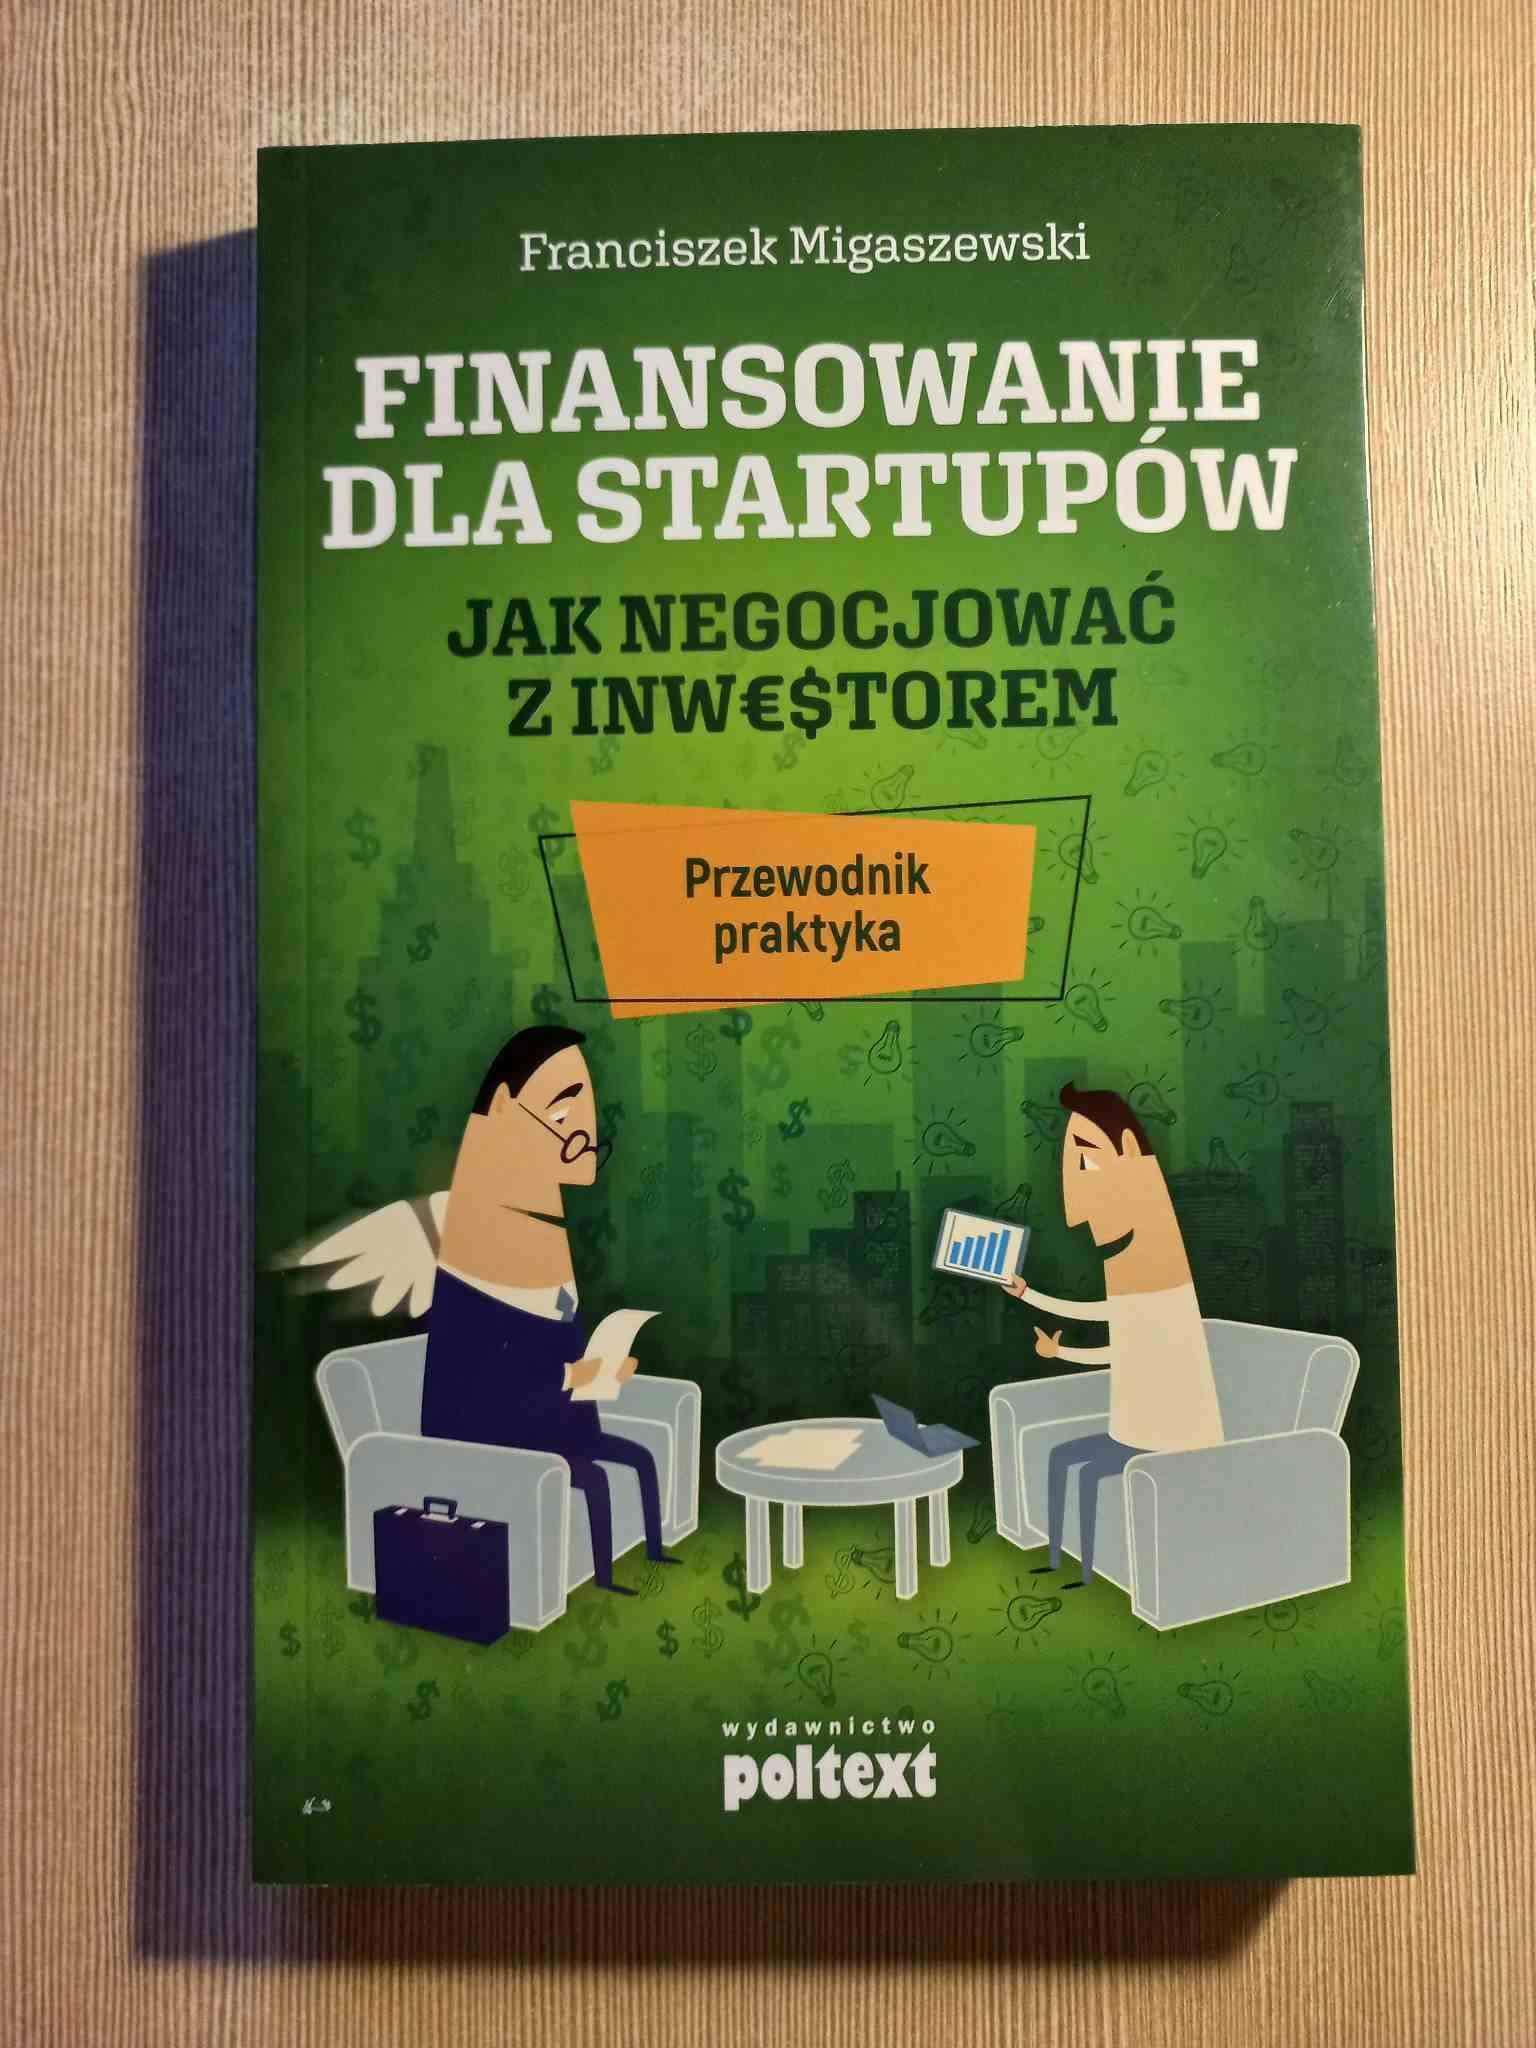 Primary picture of Finansowanie dla startupów